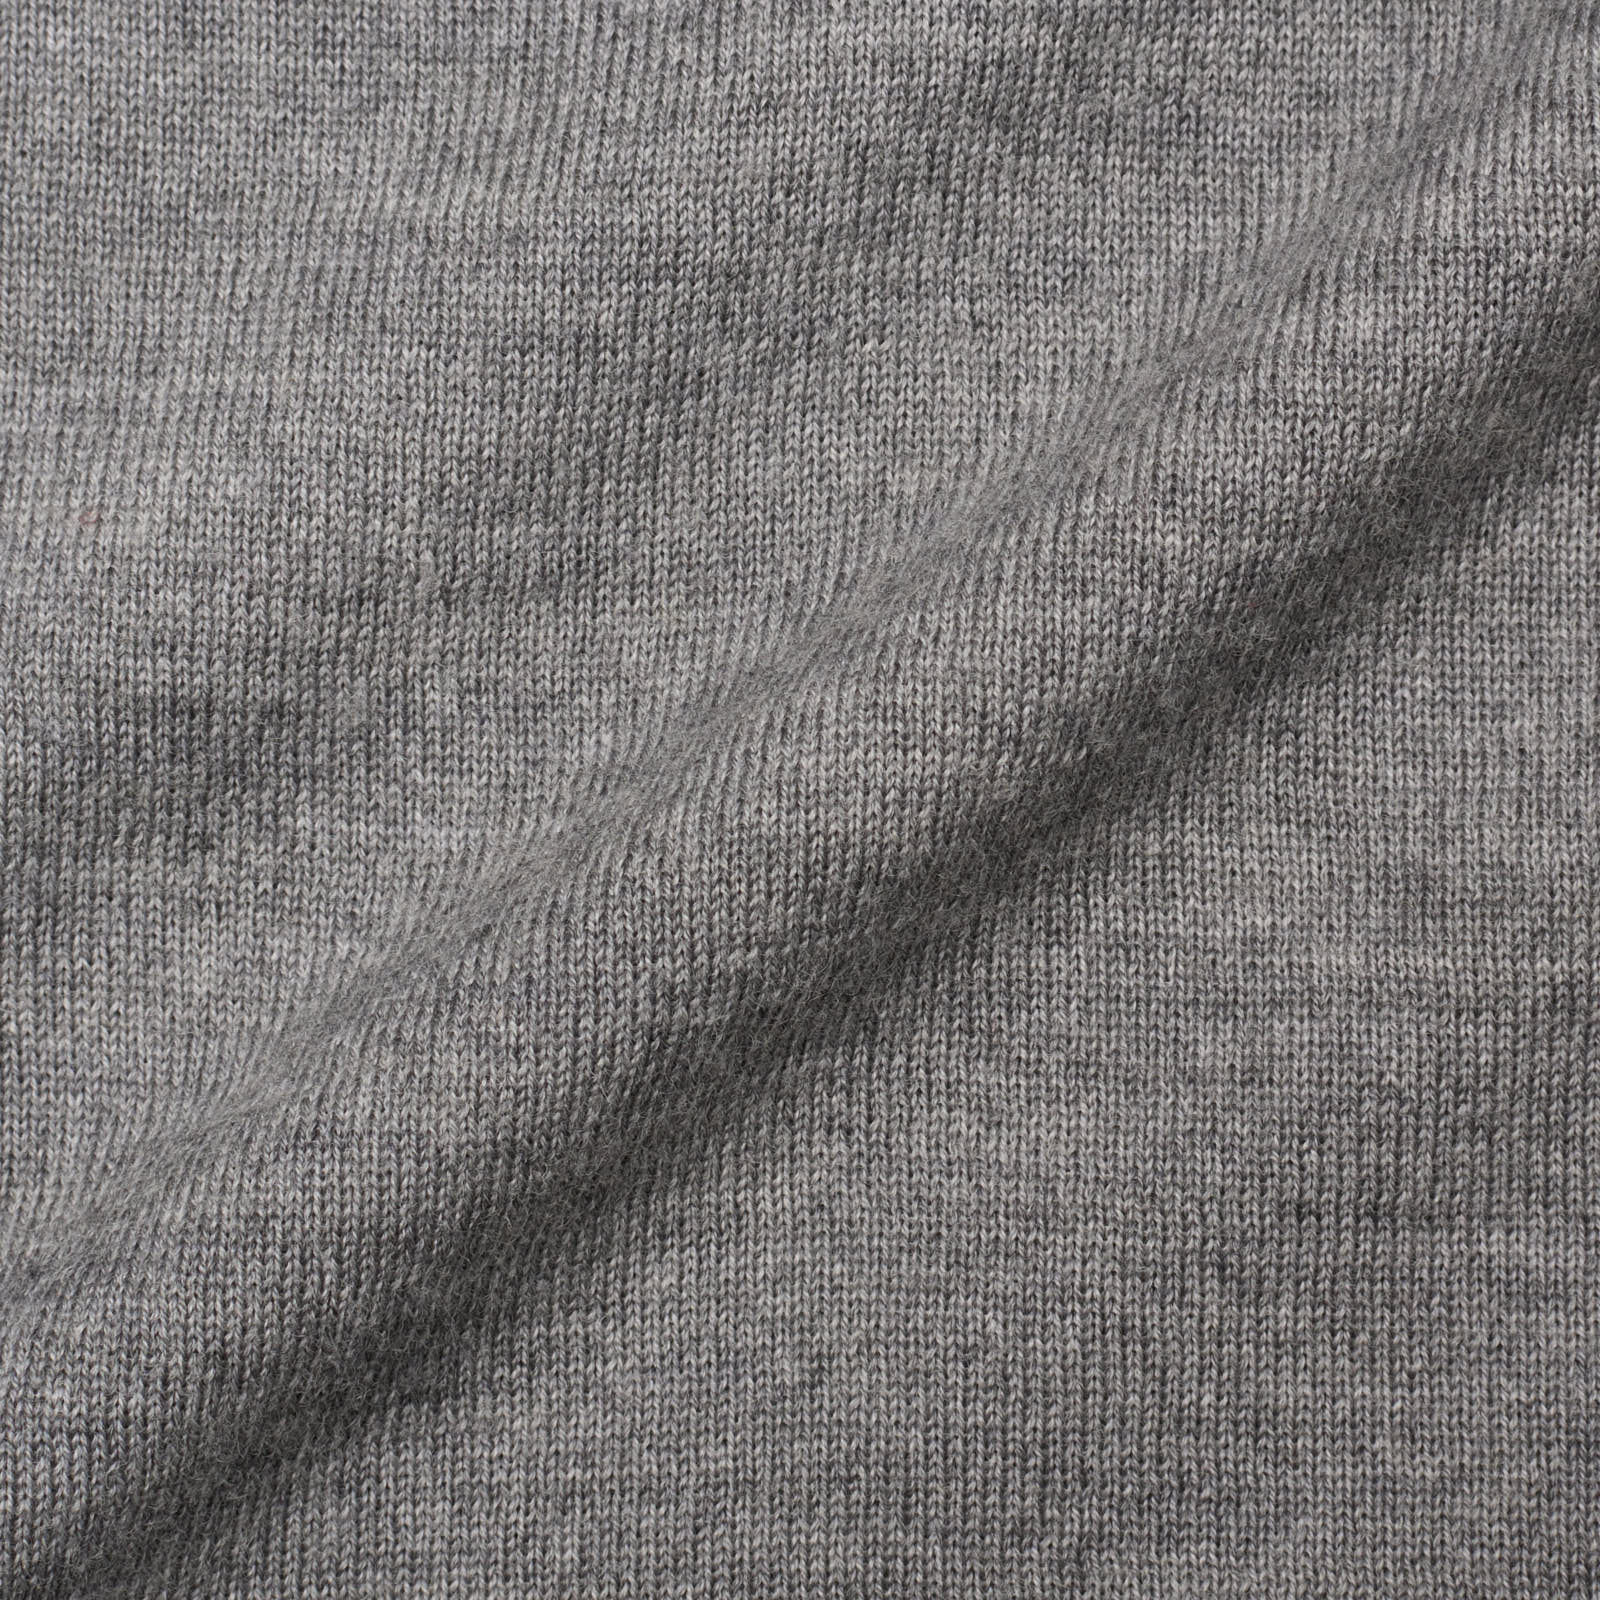 ONES Gray Loro Piana Wool Super 150's Knit Crewneck Luxury Sweater EU 54 NEW US XL